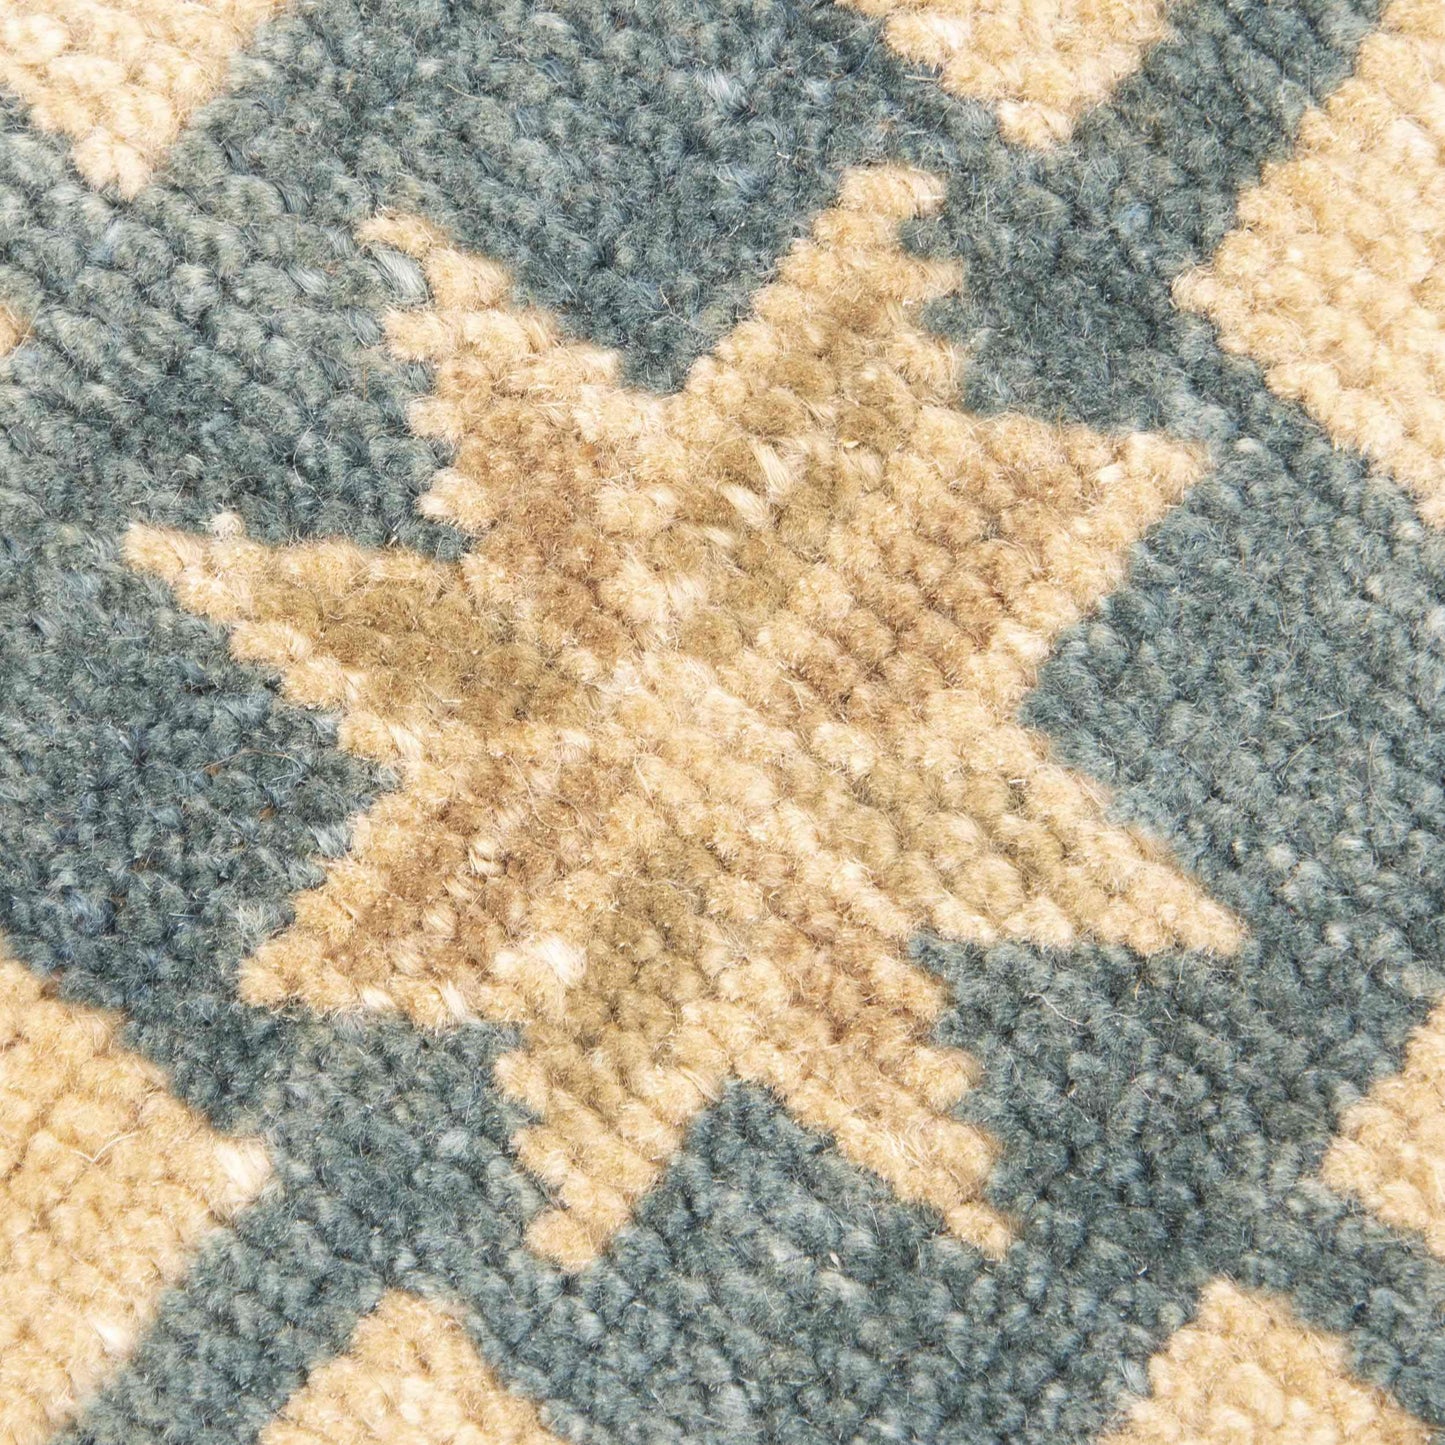 Oriental Rug Anatolian Handwoven Wool On Wool 50 x 115 Cm - 1' 8'' x 3' 10'' Sand C007 ER01